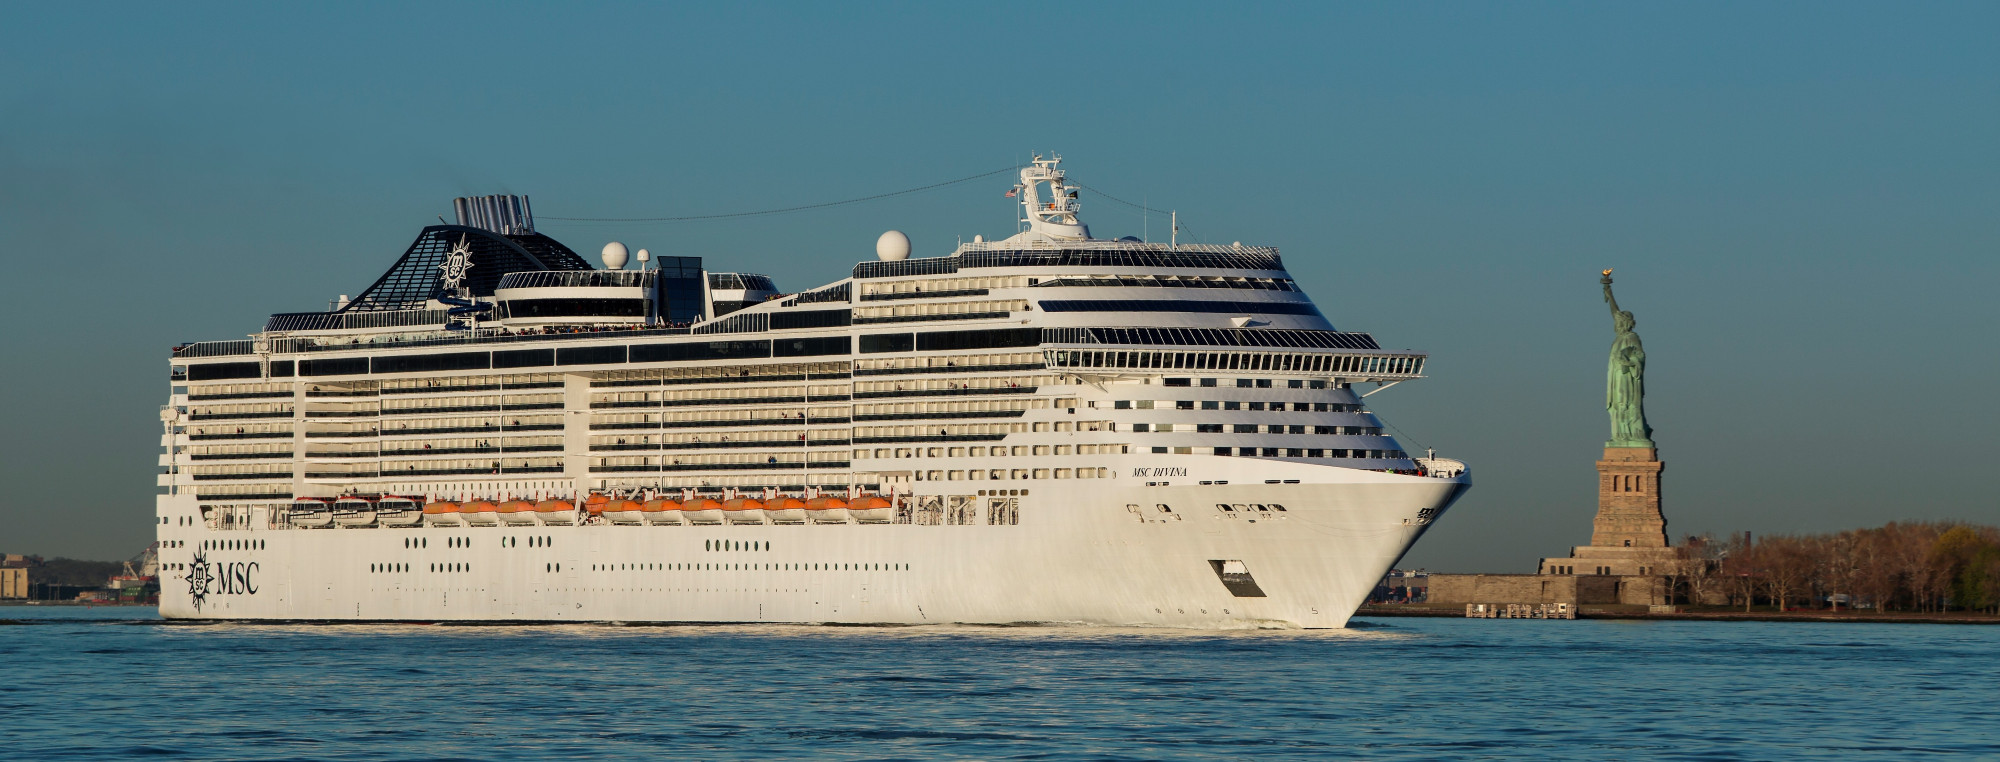 MSC Divina vchádza do New Yorku - Image: MSC Cruises